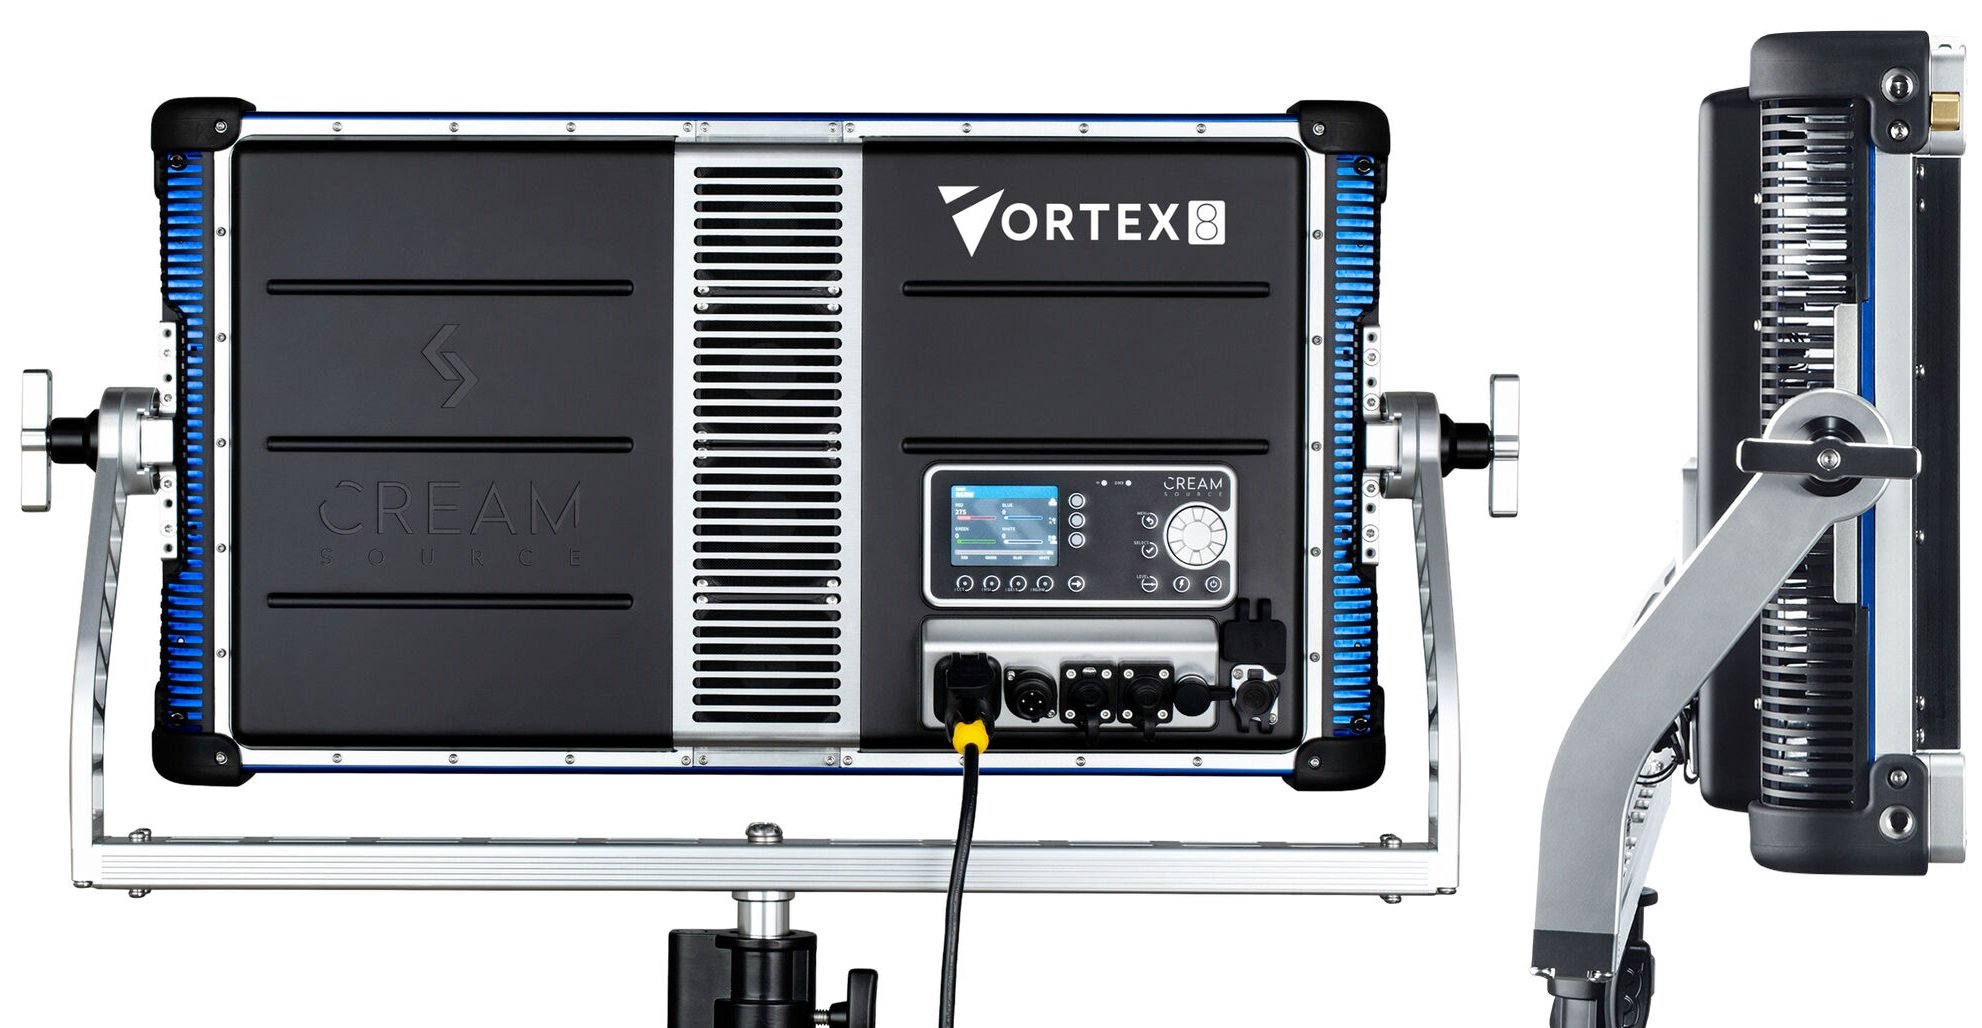 Vortex8-light-back.jpeg